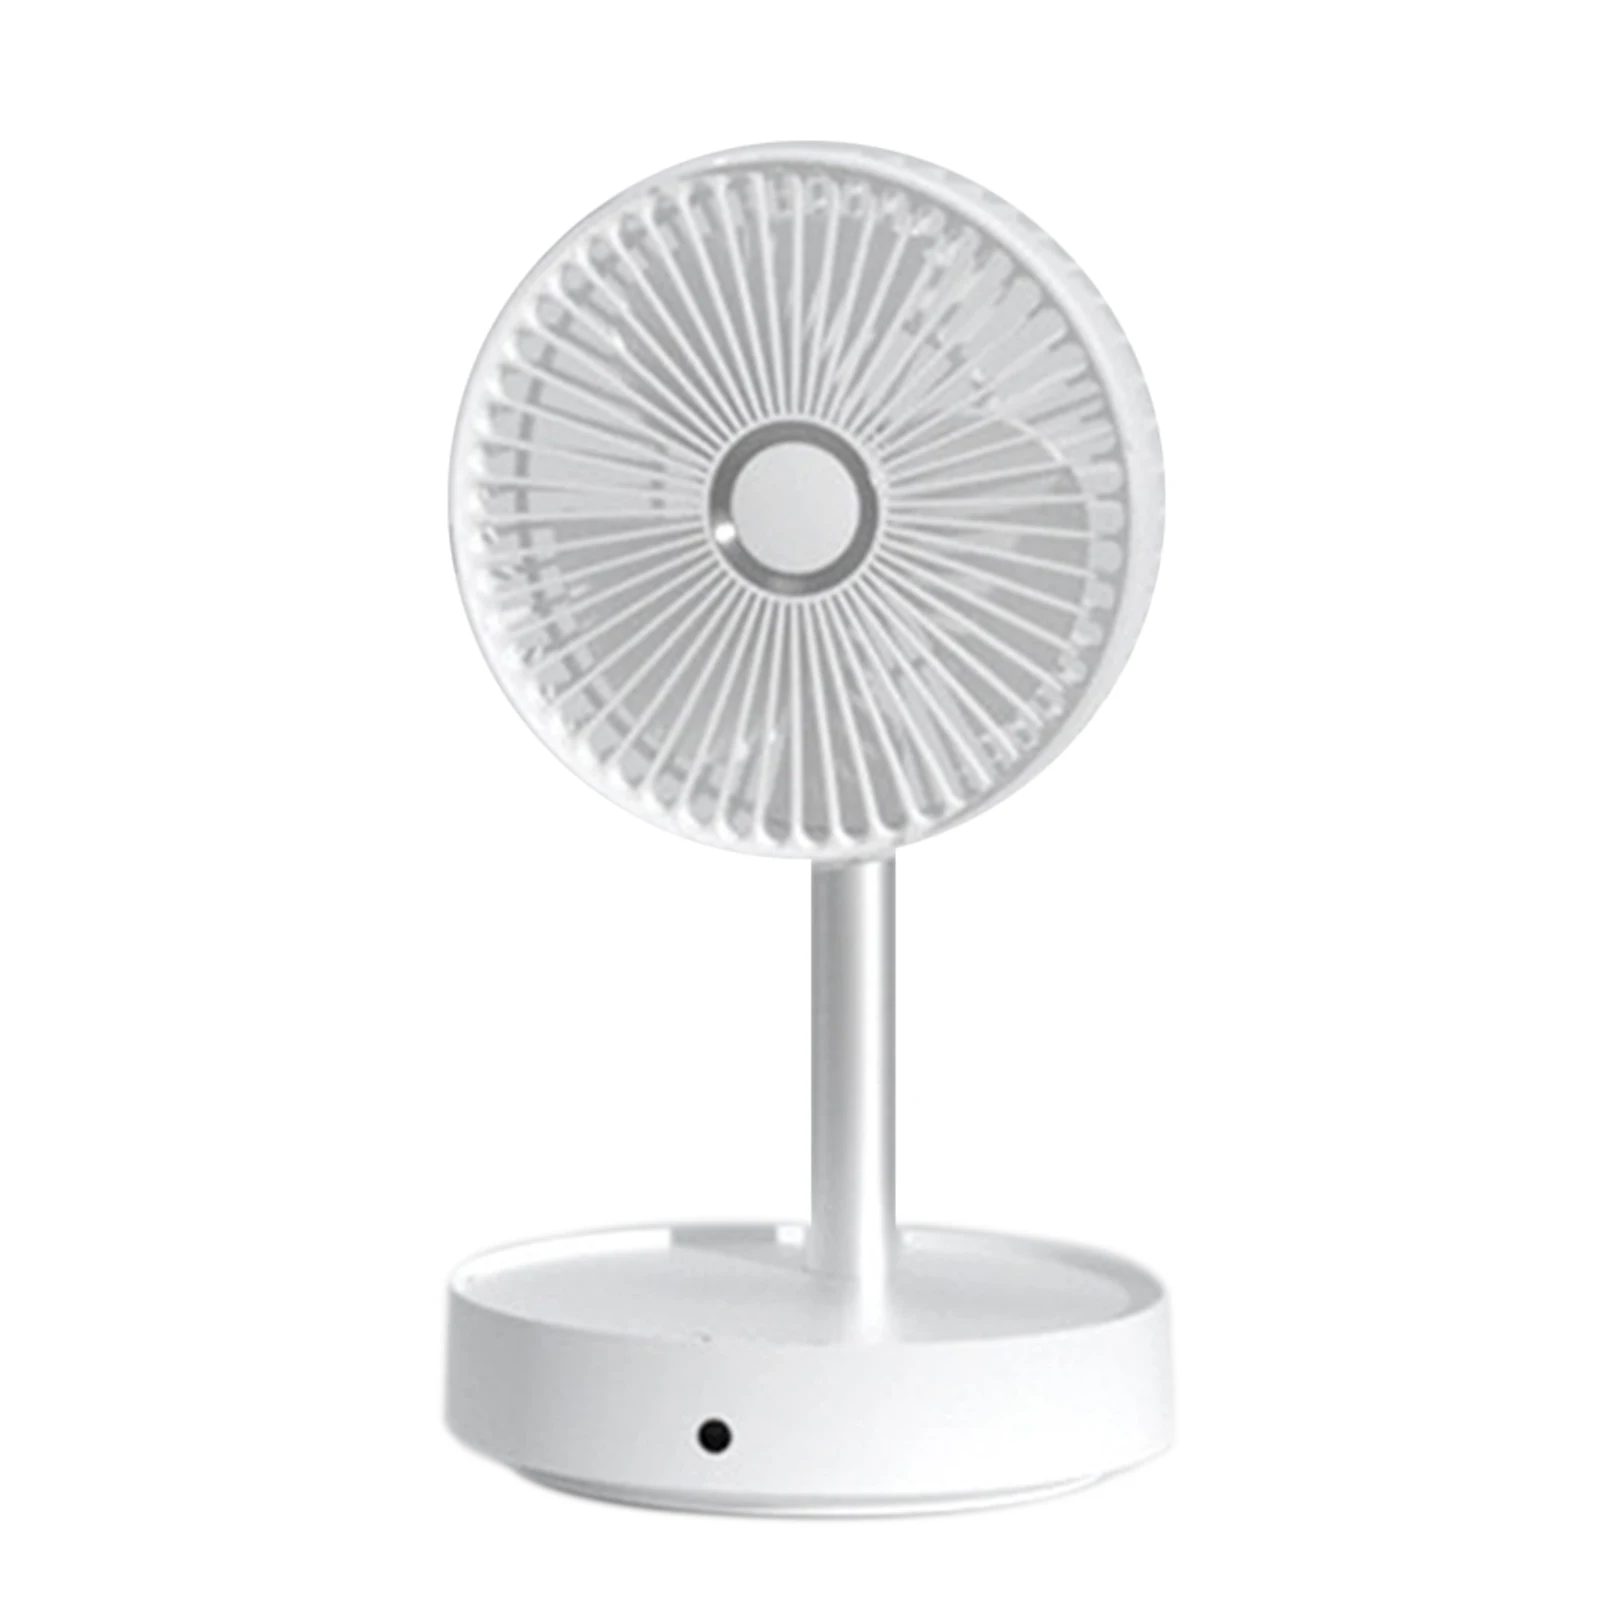 

Desk Standing Fan USB Rechargeable Fan with Remote 4 Wind Mode Oscillating Fan with Timer for Office Dorm desk desk desk desk